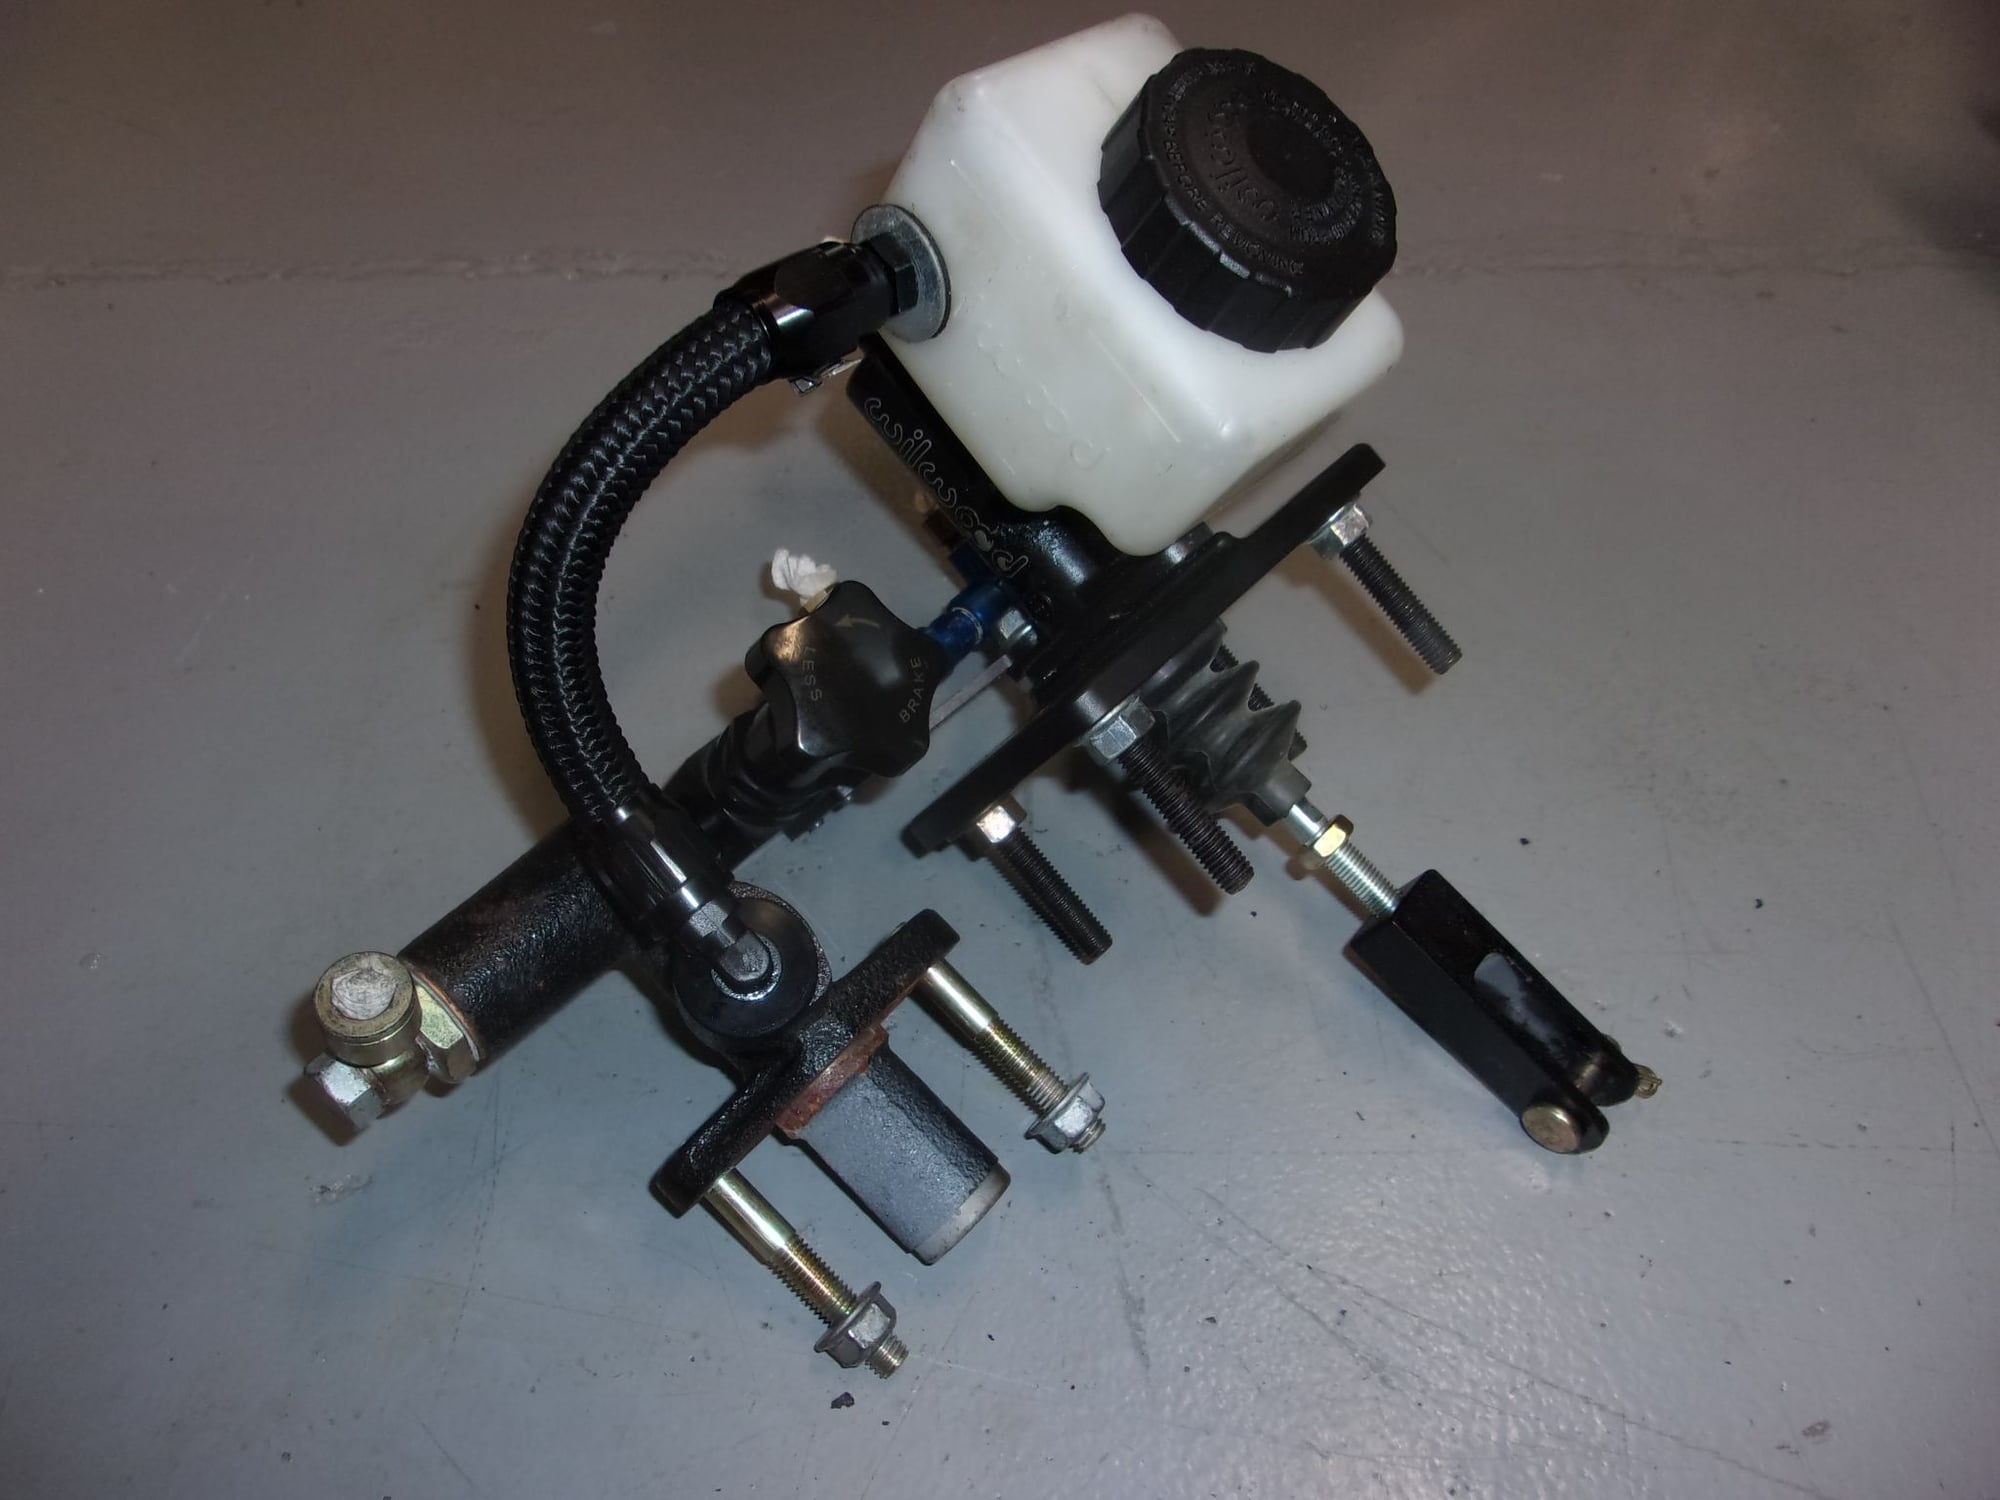 Brakes - CHASE BAYS brake booster delete kit - Used - 1993 to 2002 Mazda RX-7 - Murfreesboro, TN 37130, United States